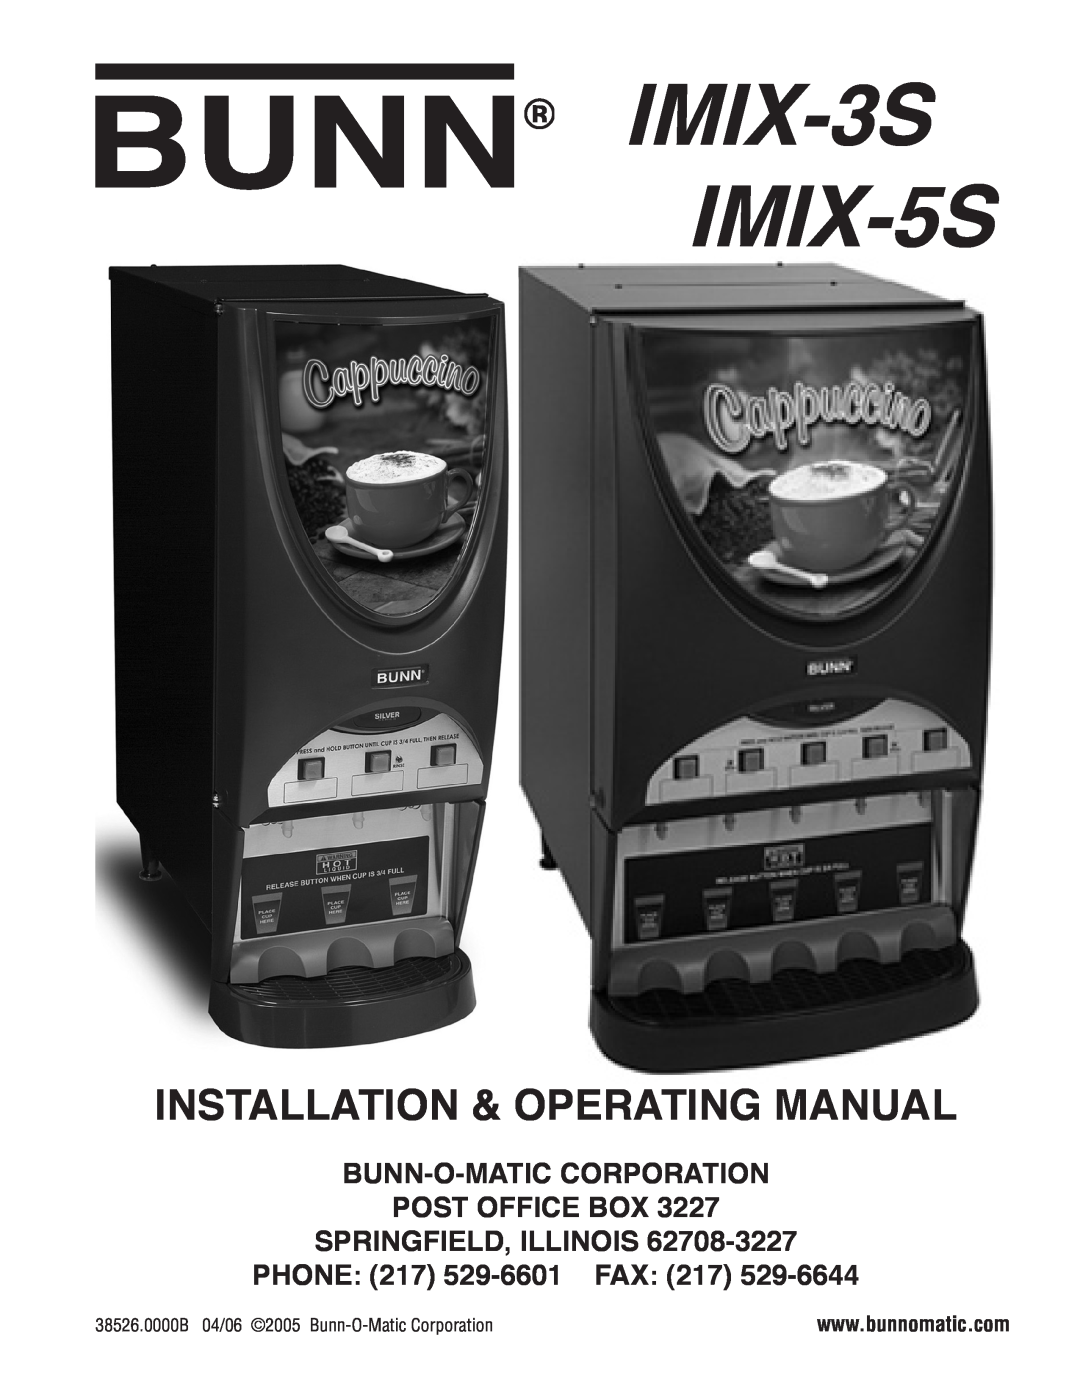 Bunn service manual IMIX-3S IMIX-5S, Installation & Operating Guide, Bunn-O-Matic Corporation 